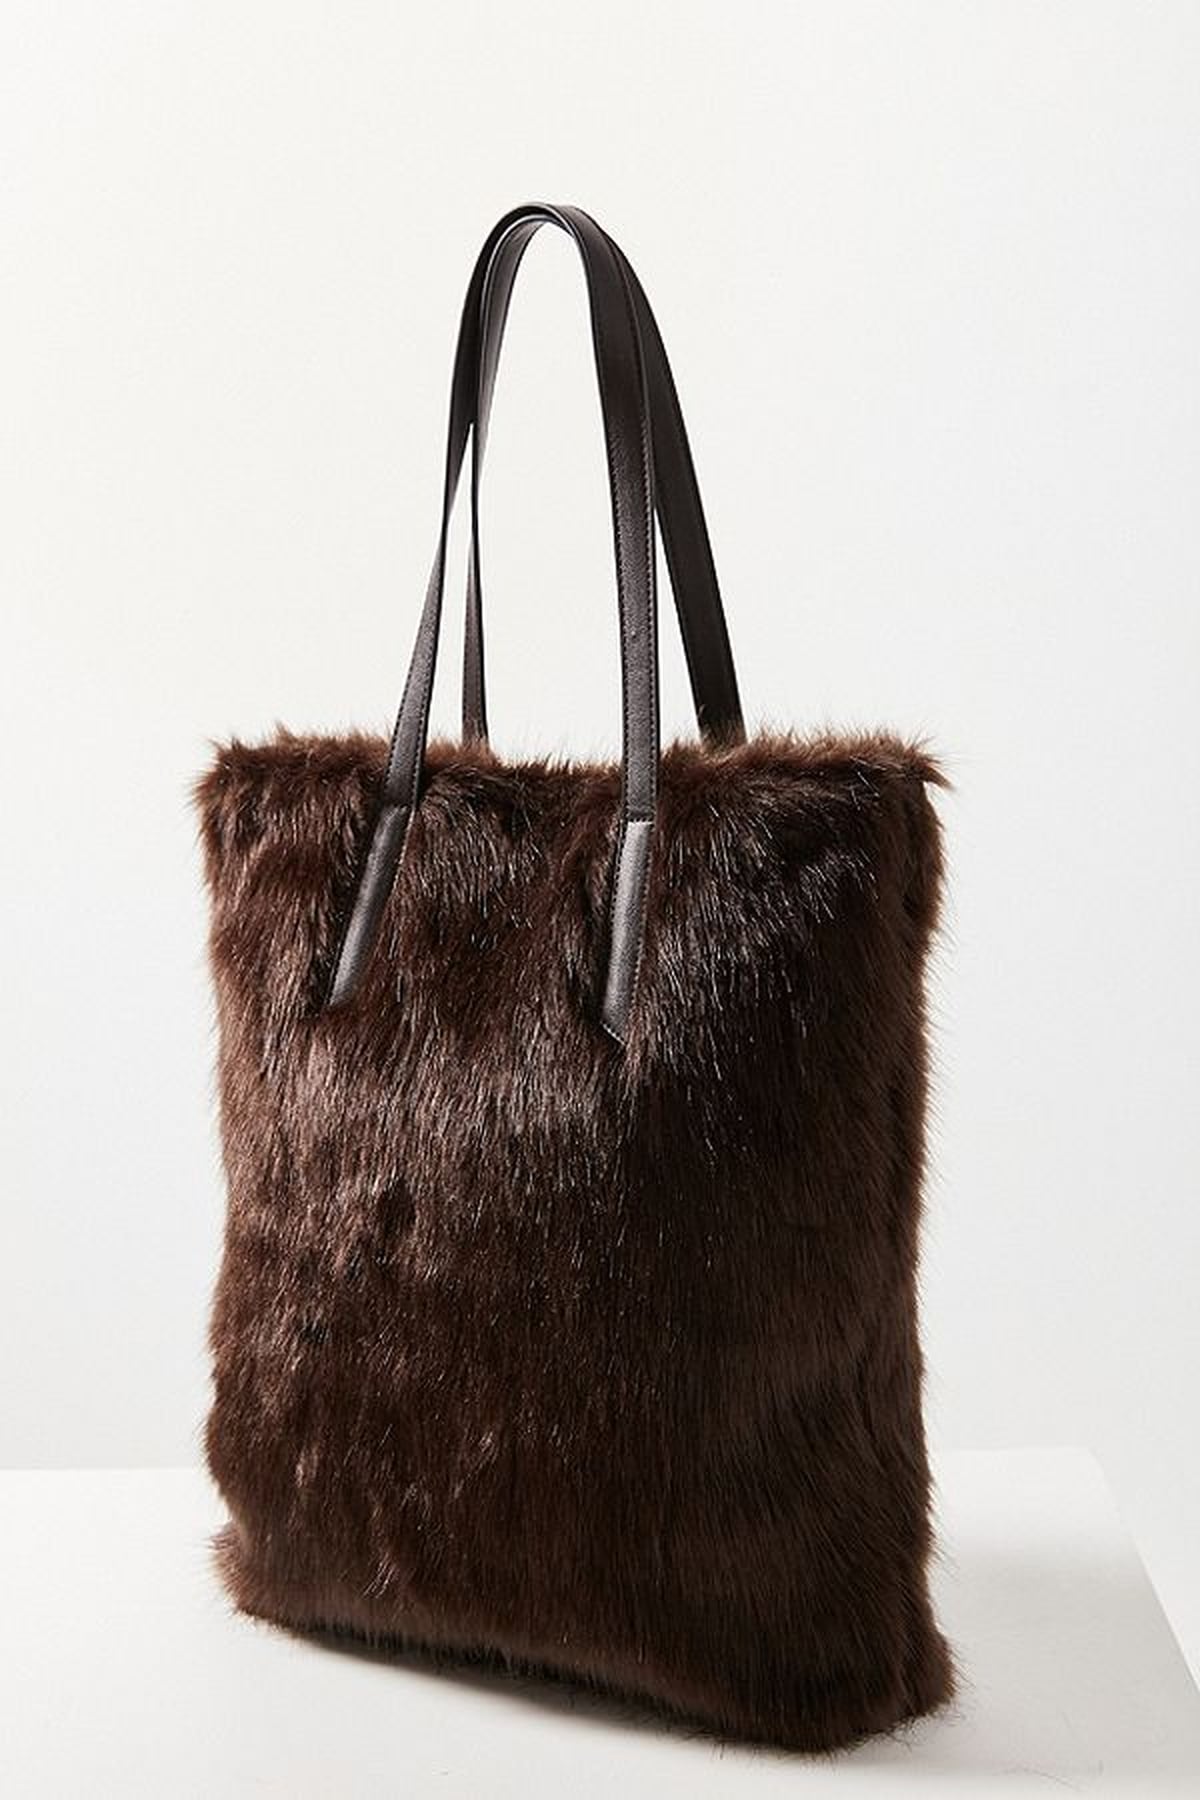 Chrissy Teigen's Fur Tote Bag | POPSUGAR Fashion